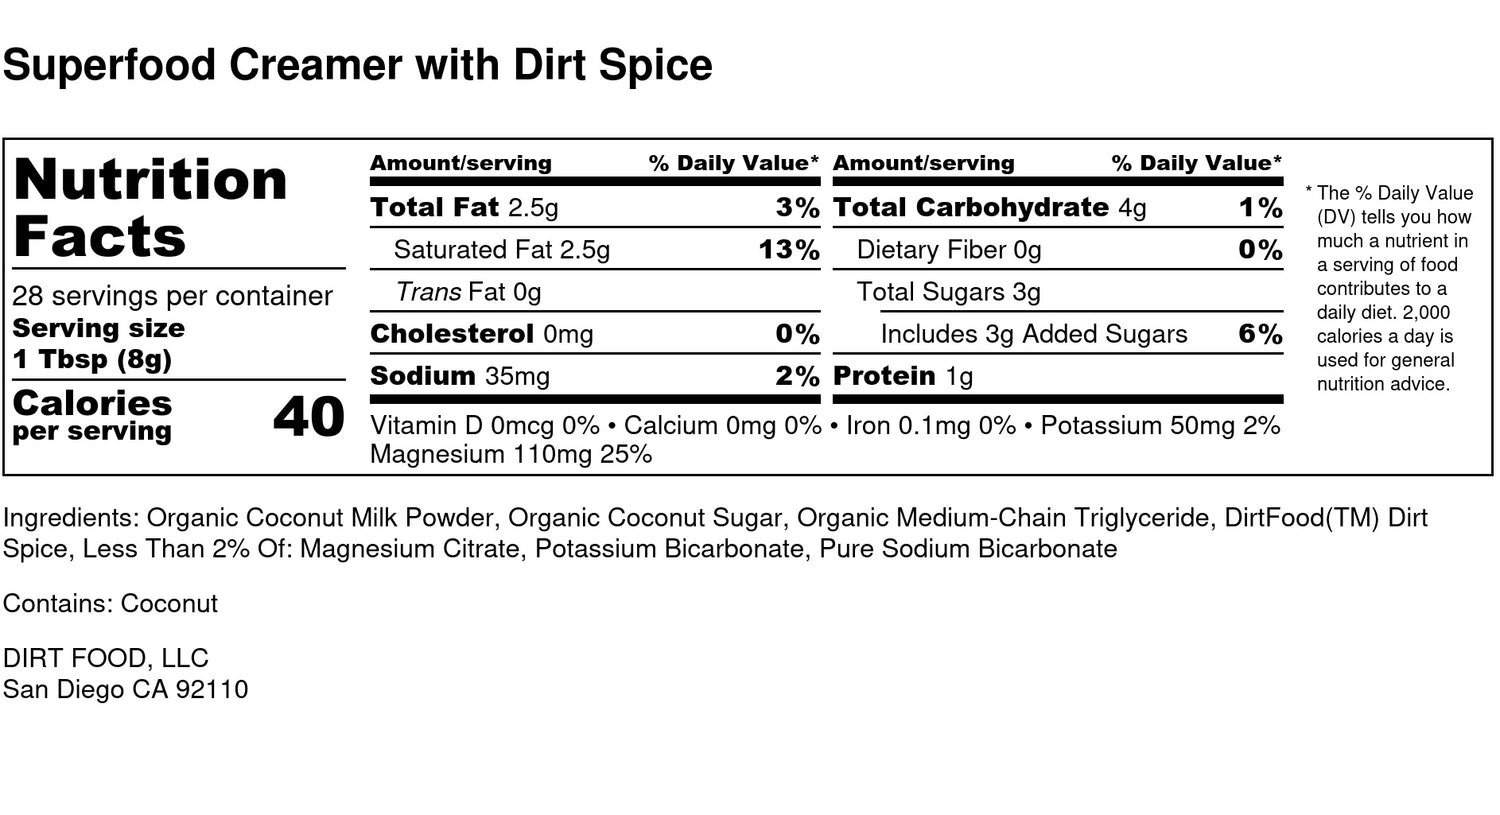 Superfood Alkaline Creamer with Dirt Spice (8oz)